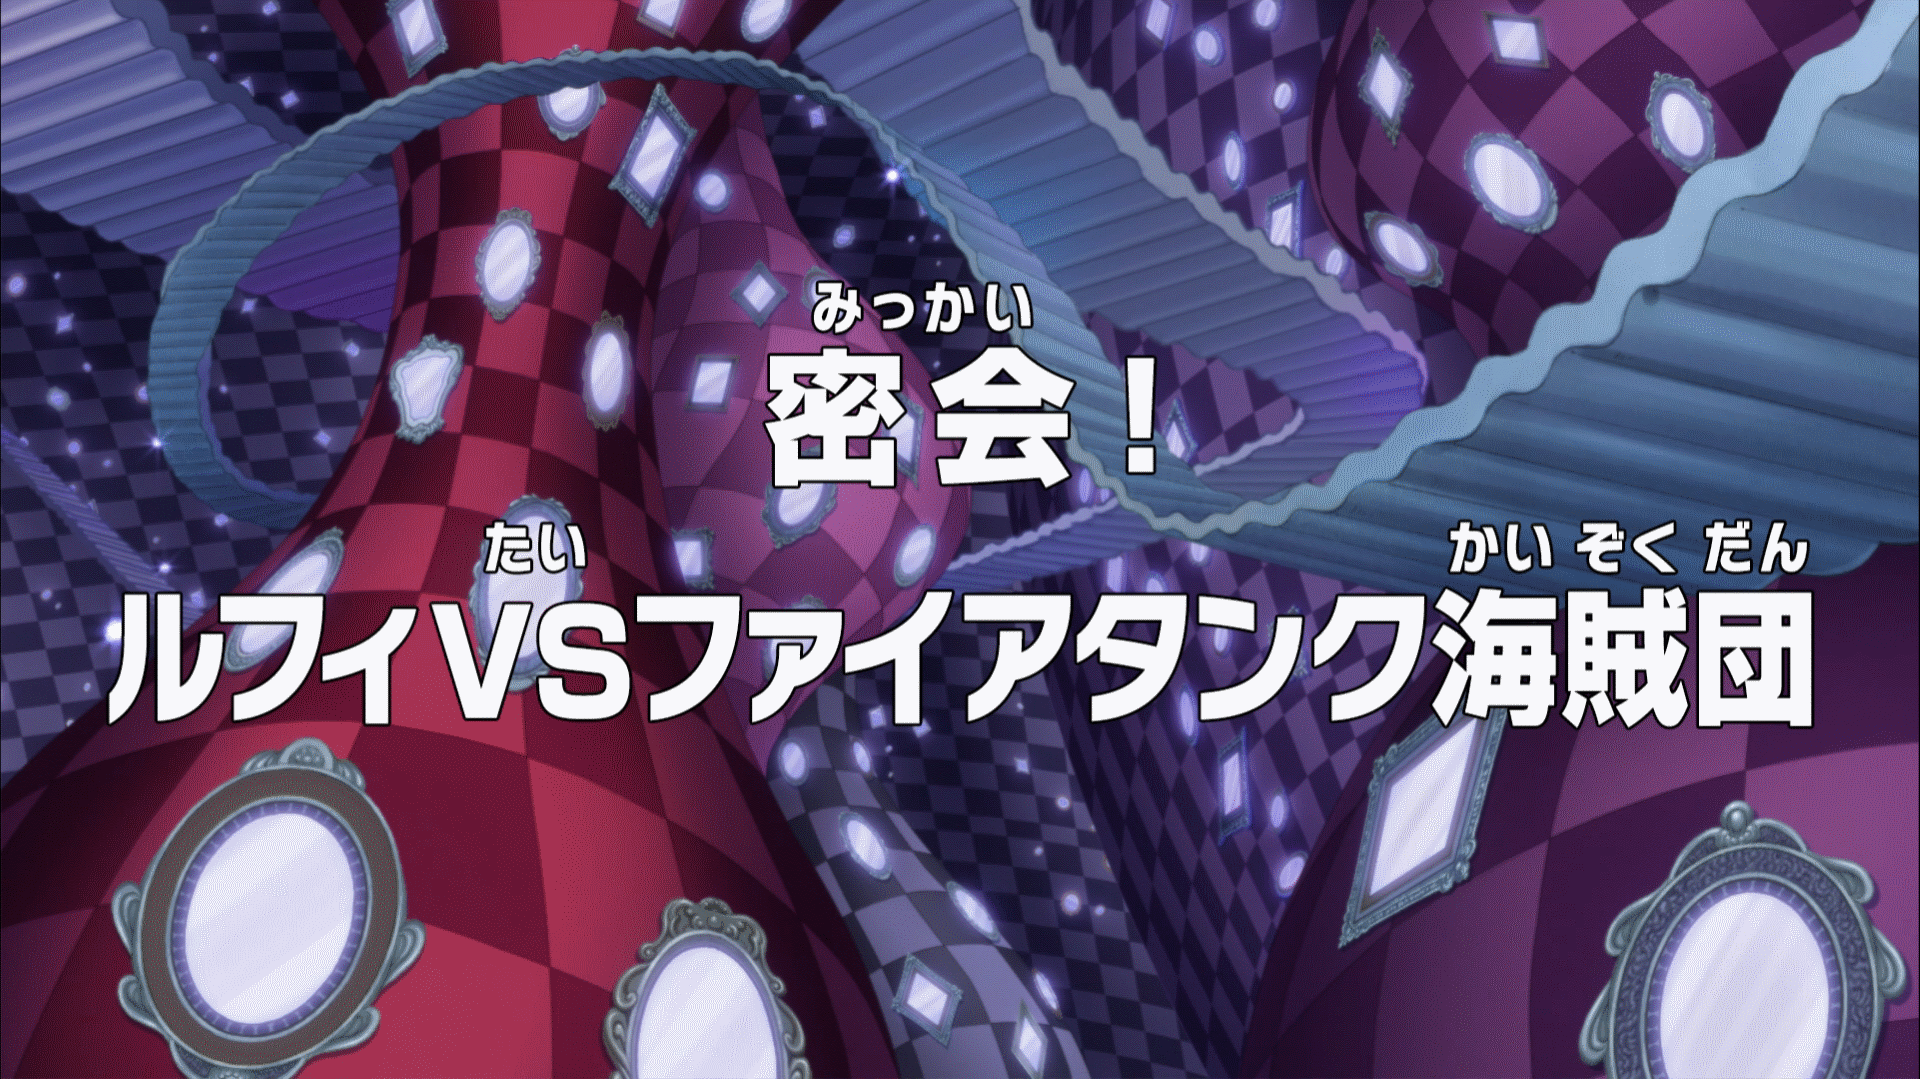 One Piece/Opening Credits 16 - Anime Bath Scene Wiki